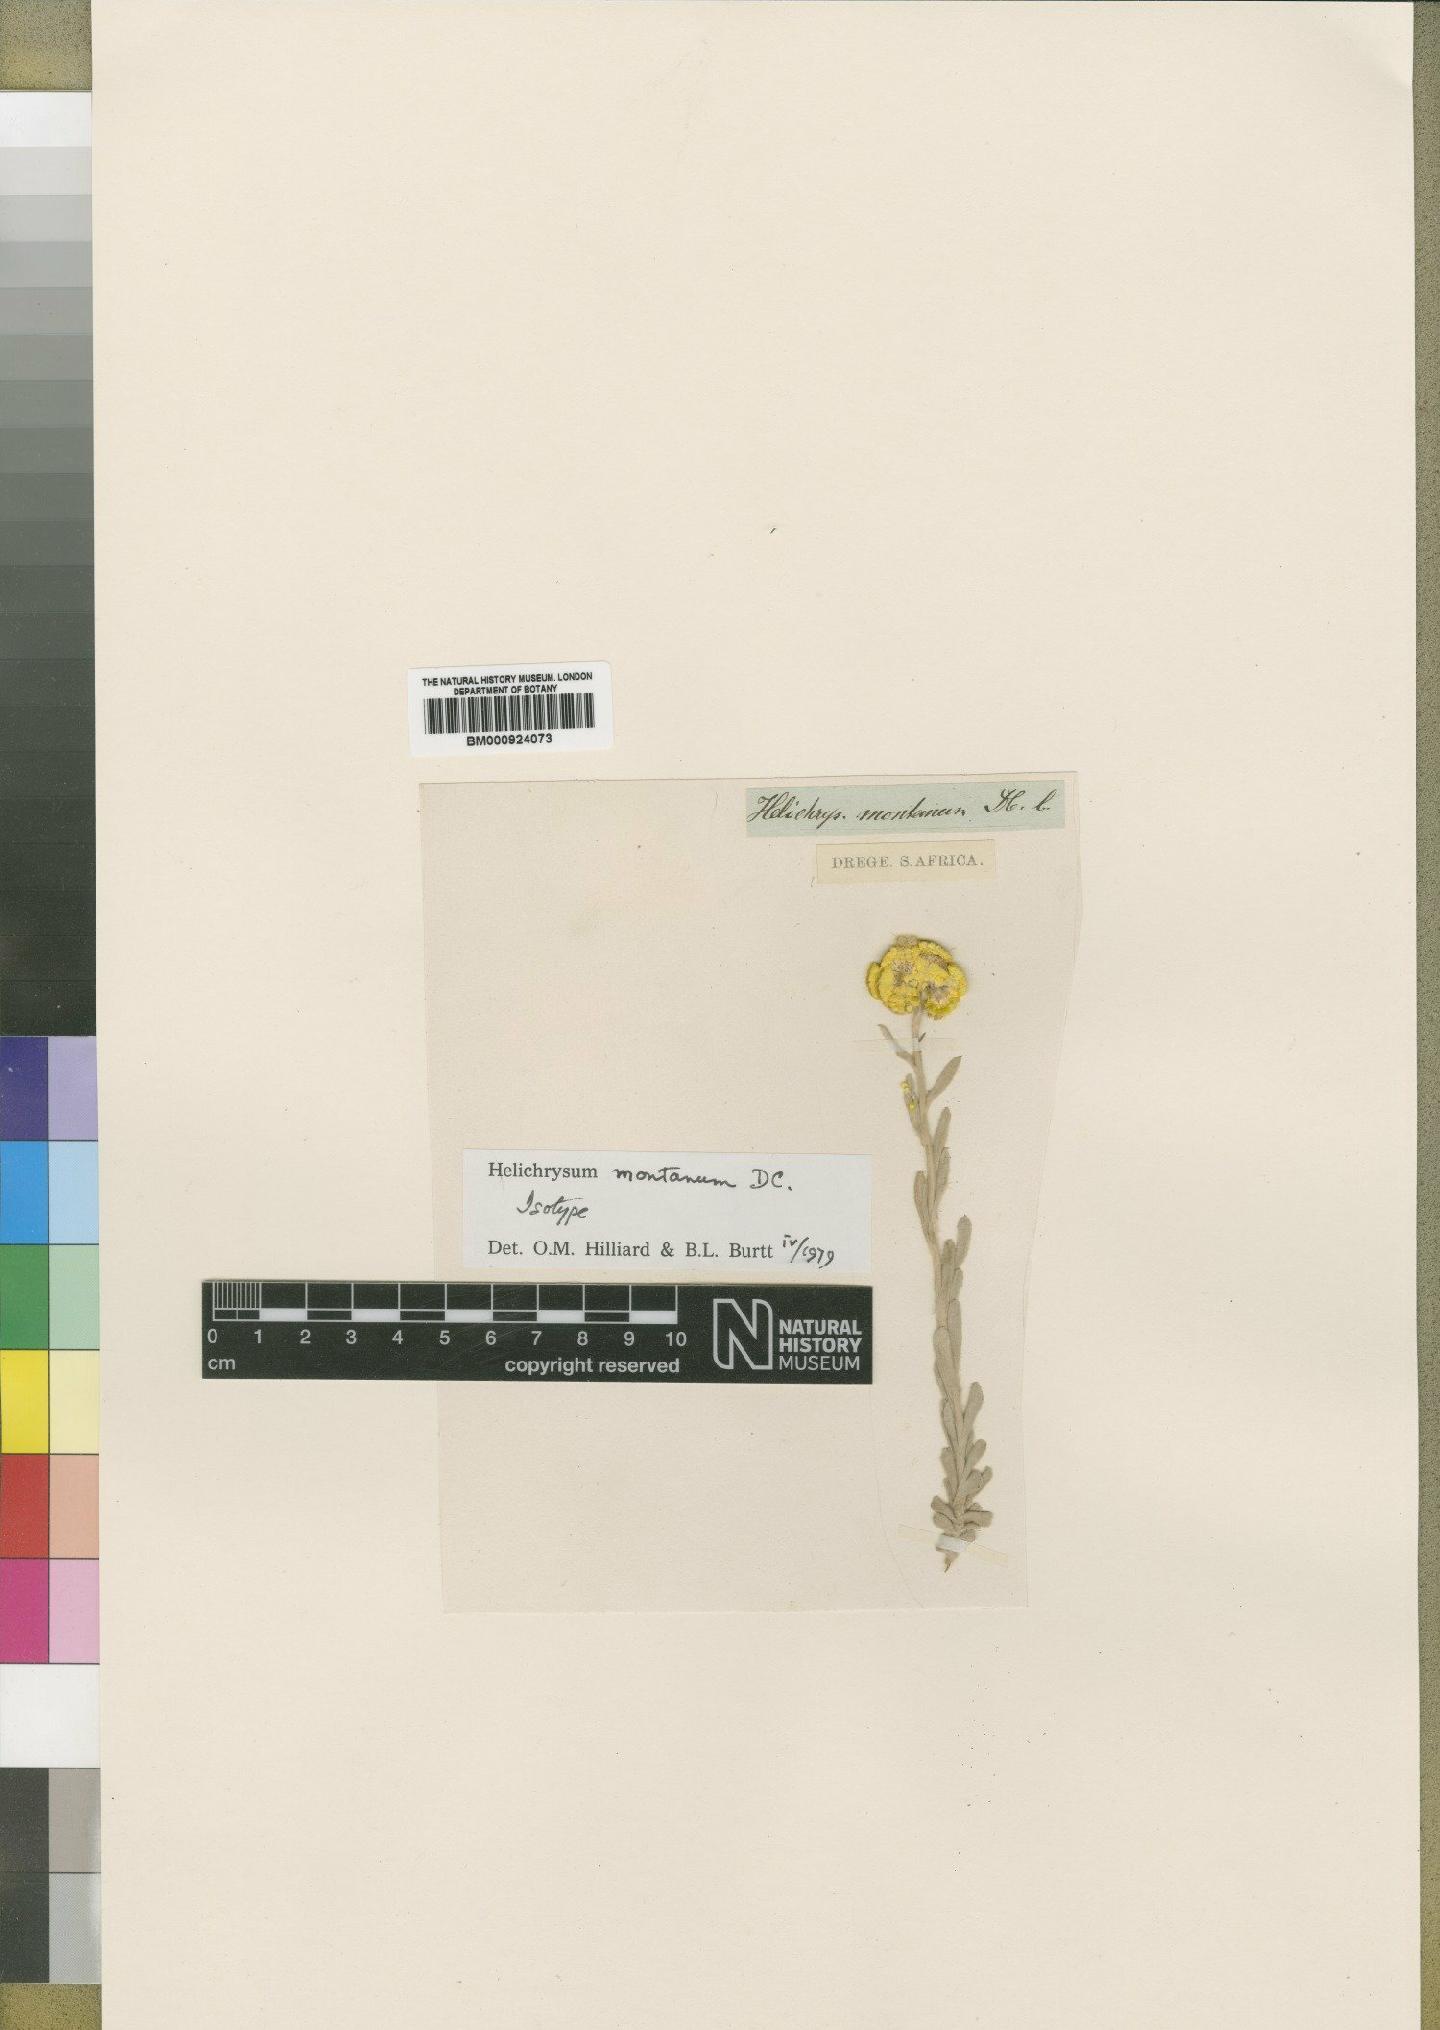 To NHMUK collection (Helichrysum splendidum var. montanum (DC.) Harv.; Isotype; NHMUK:ecatalogue:4529101)